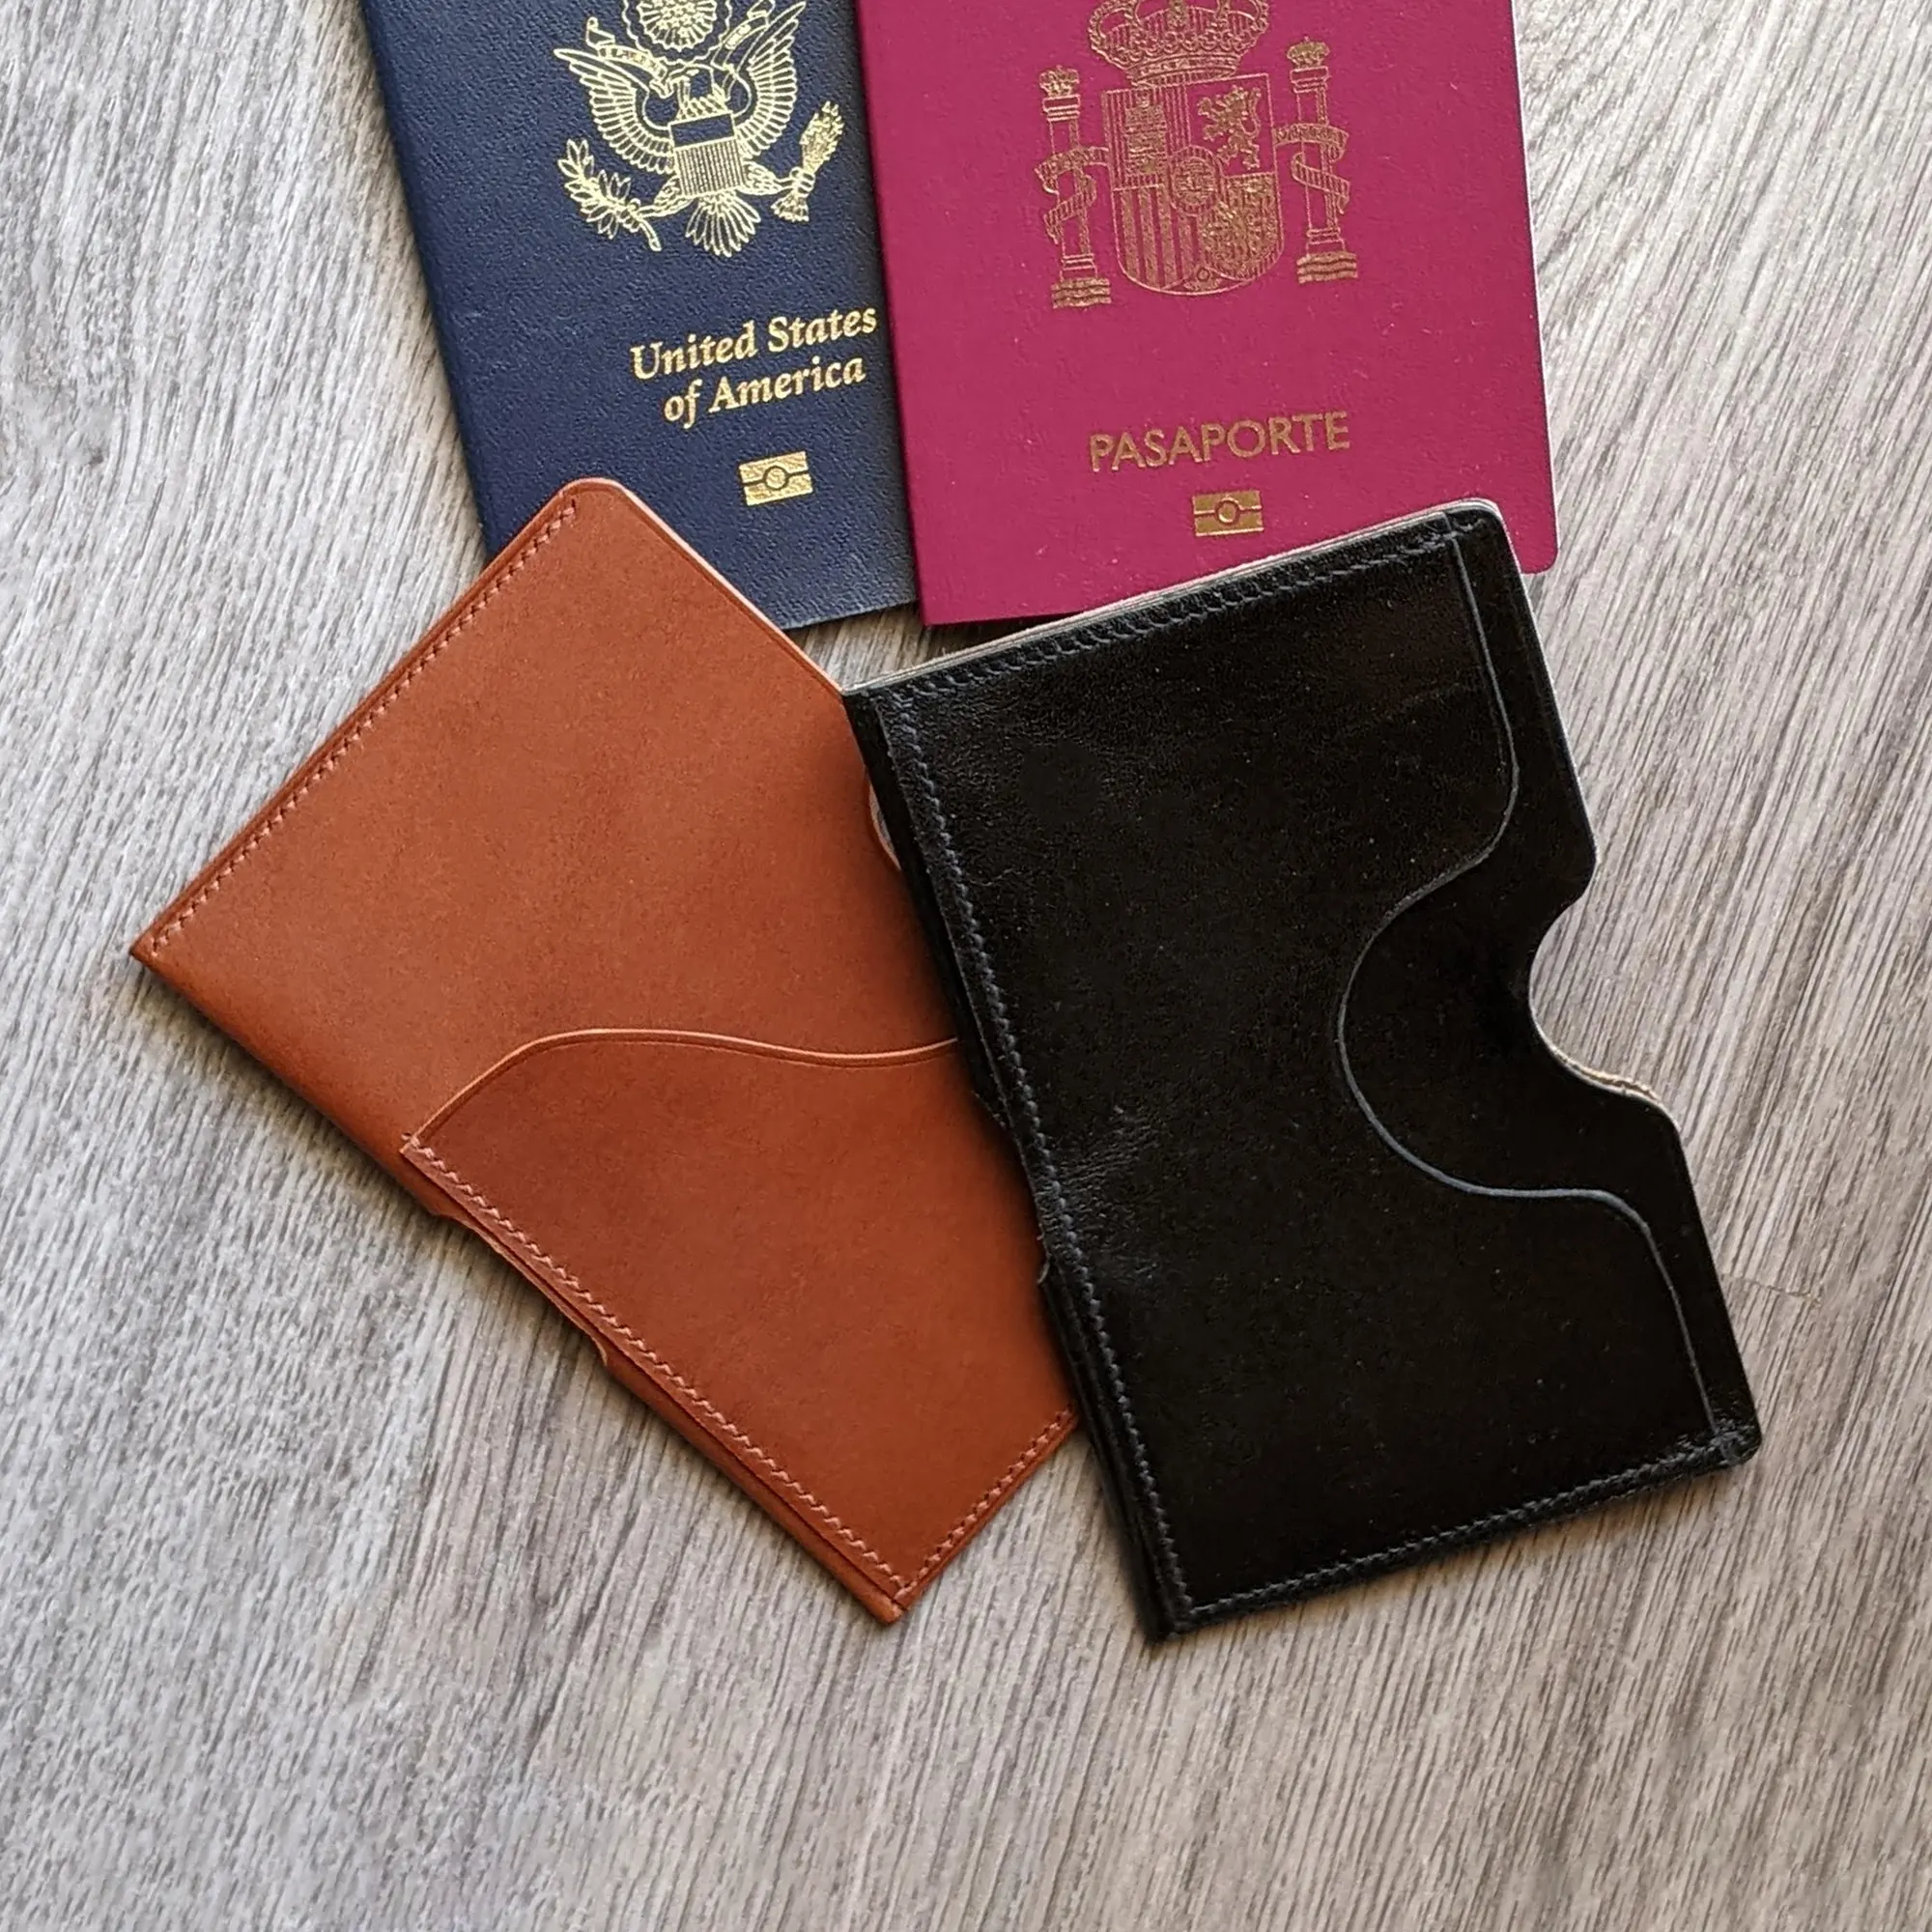 possala designs leather passport wallet